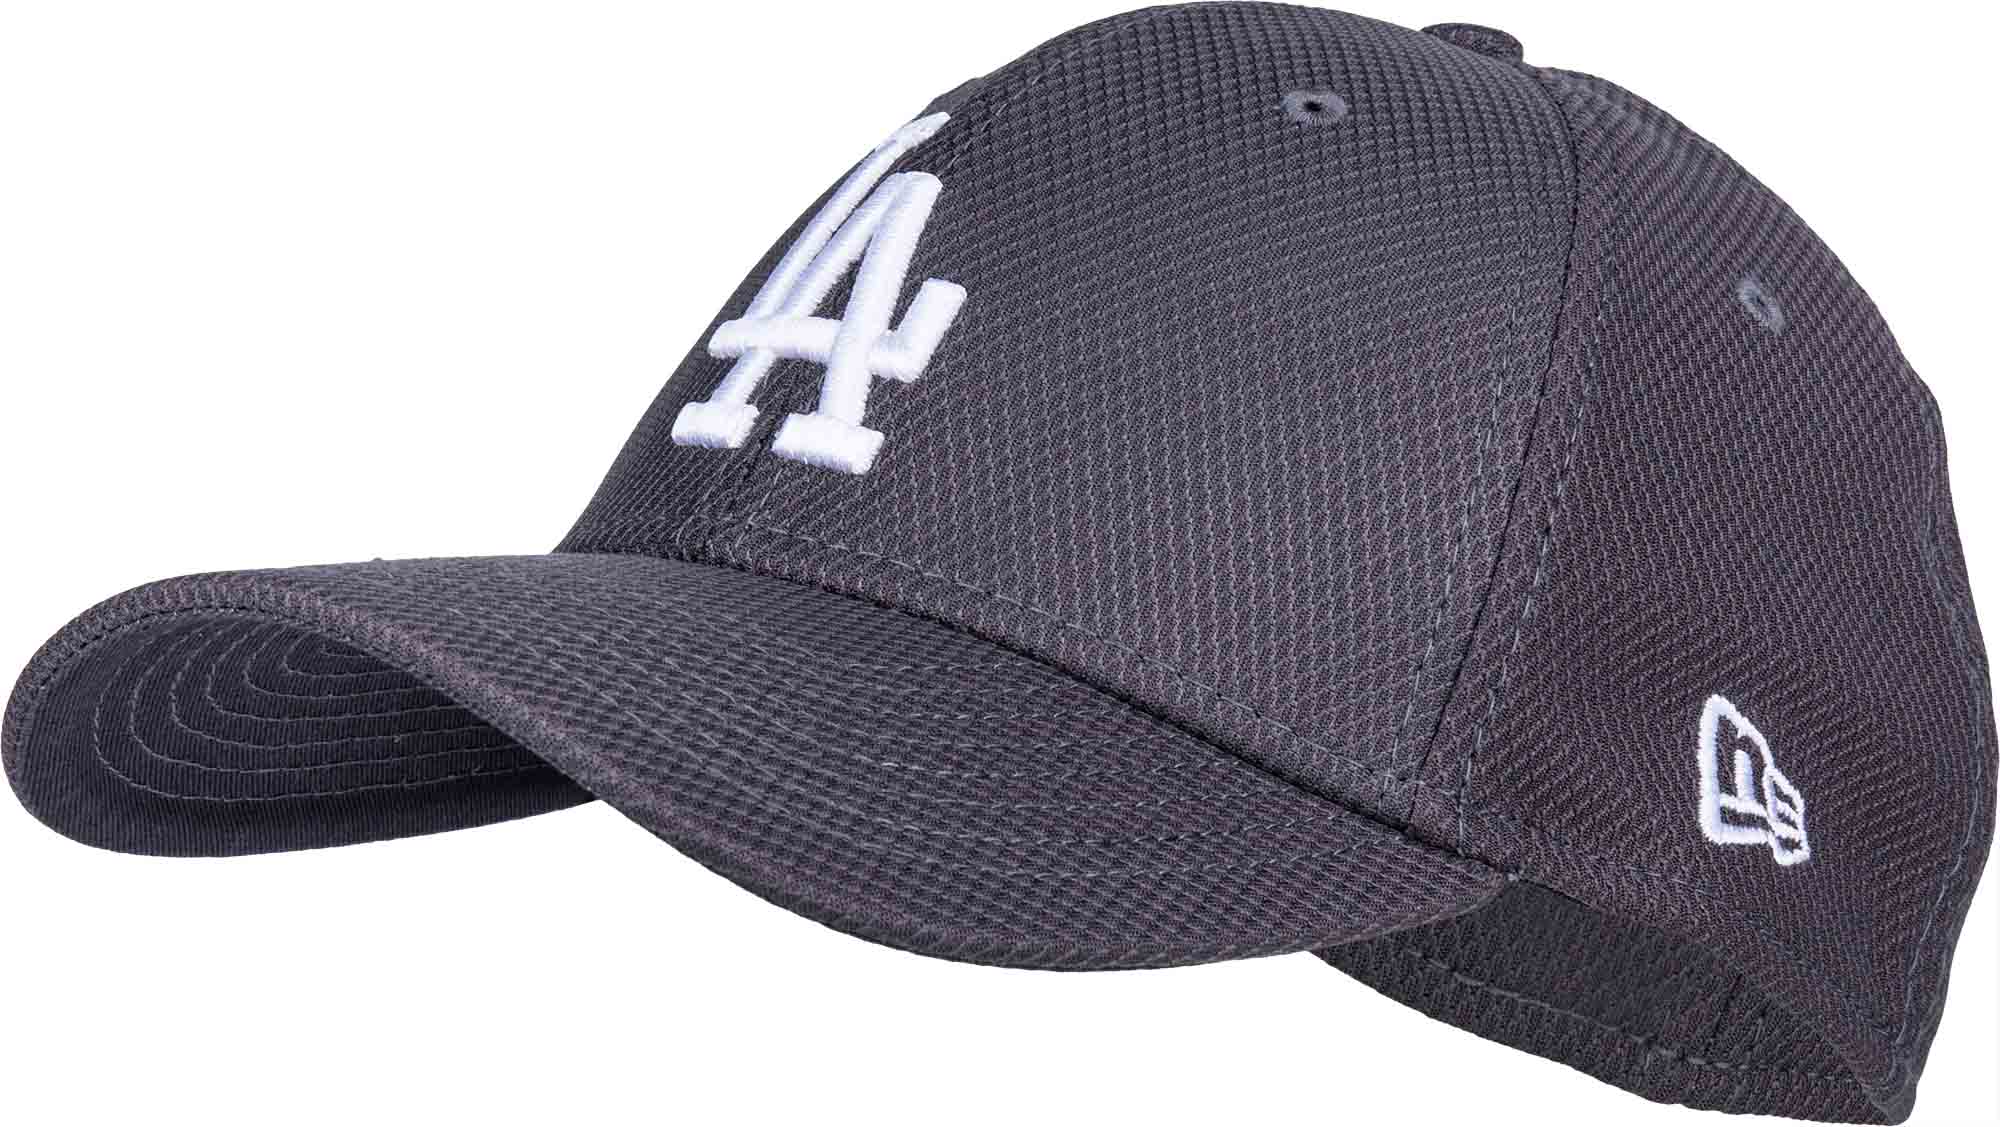 Men's club baseball cap